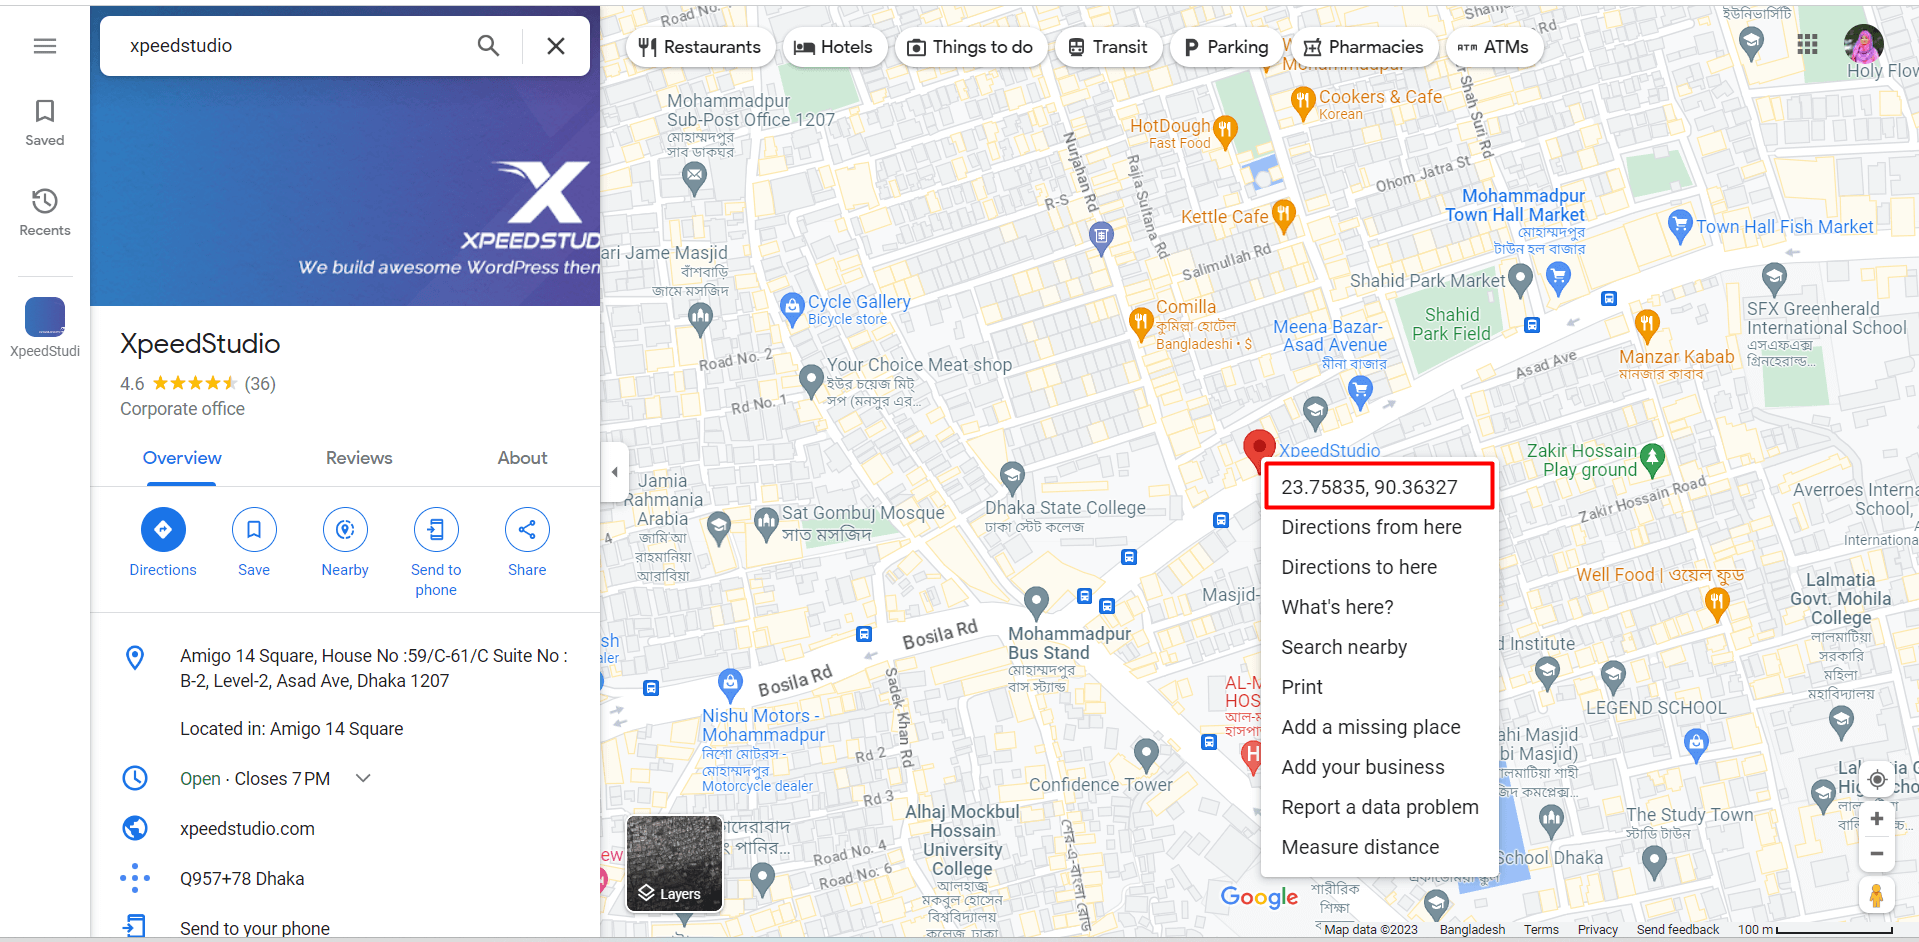 Top 5 Google Maps browser games - Google Maps Widget